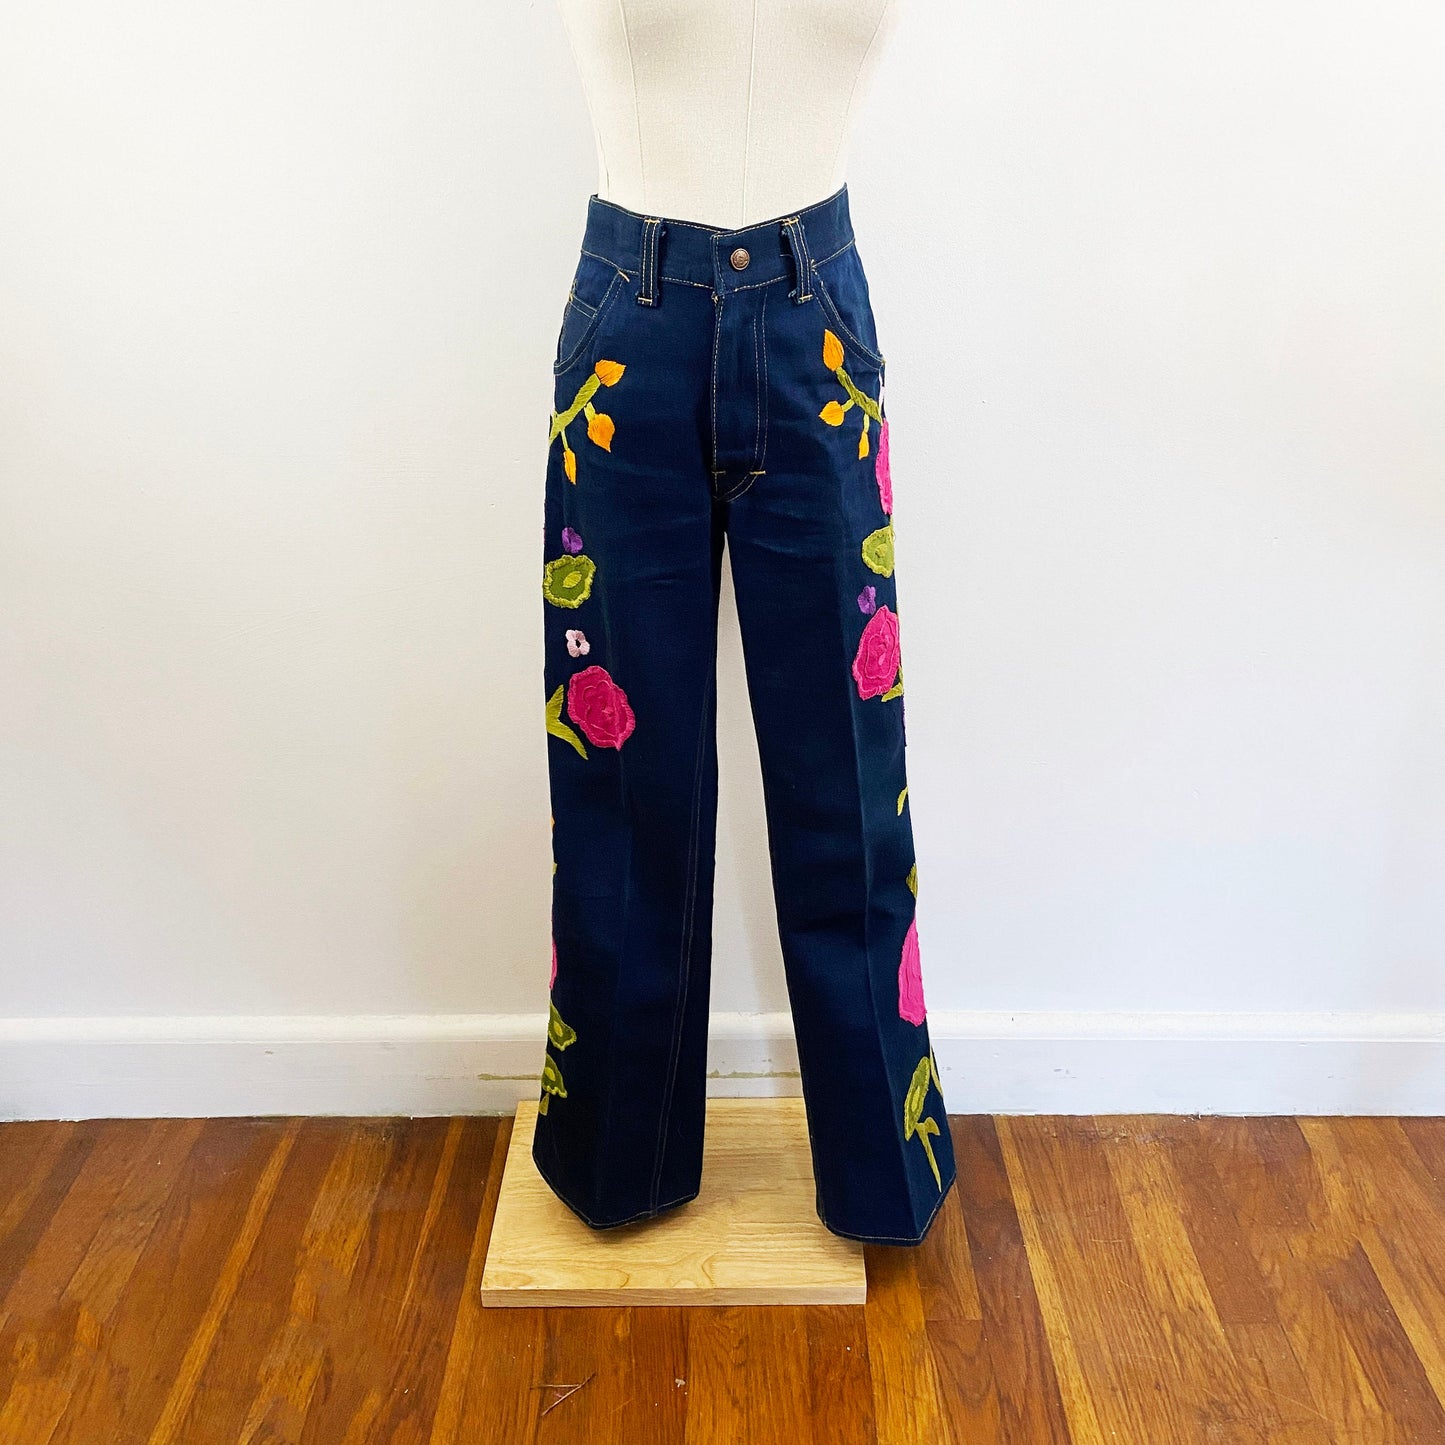 1970s Denim Floral Embroidered Jeans Flower Power Dark Wash Jeans Boho Hippie Flare Jeans Vintage Rocker / Size Medium 8/10